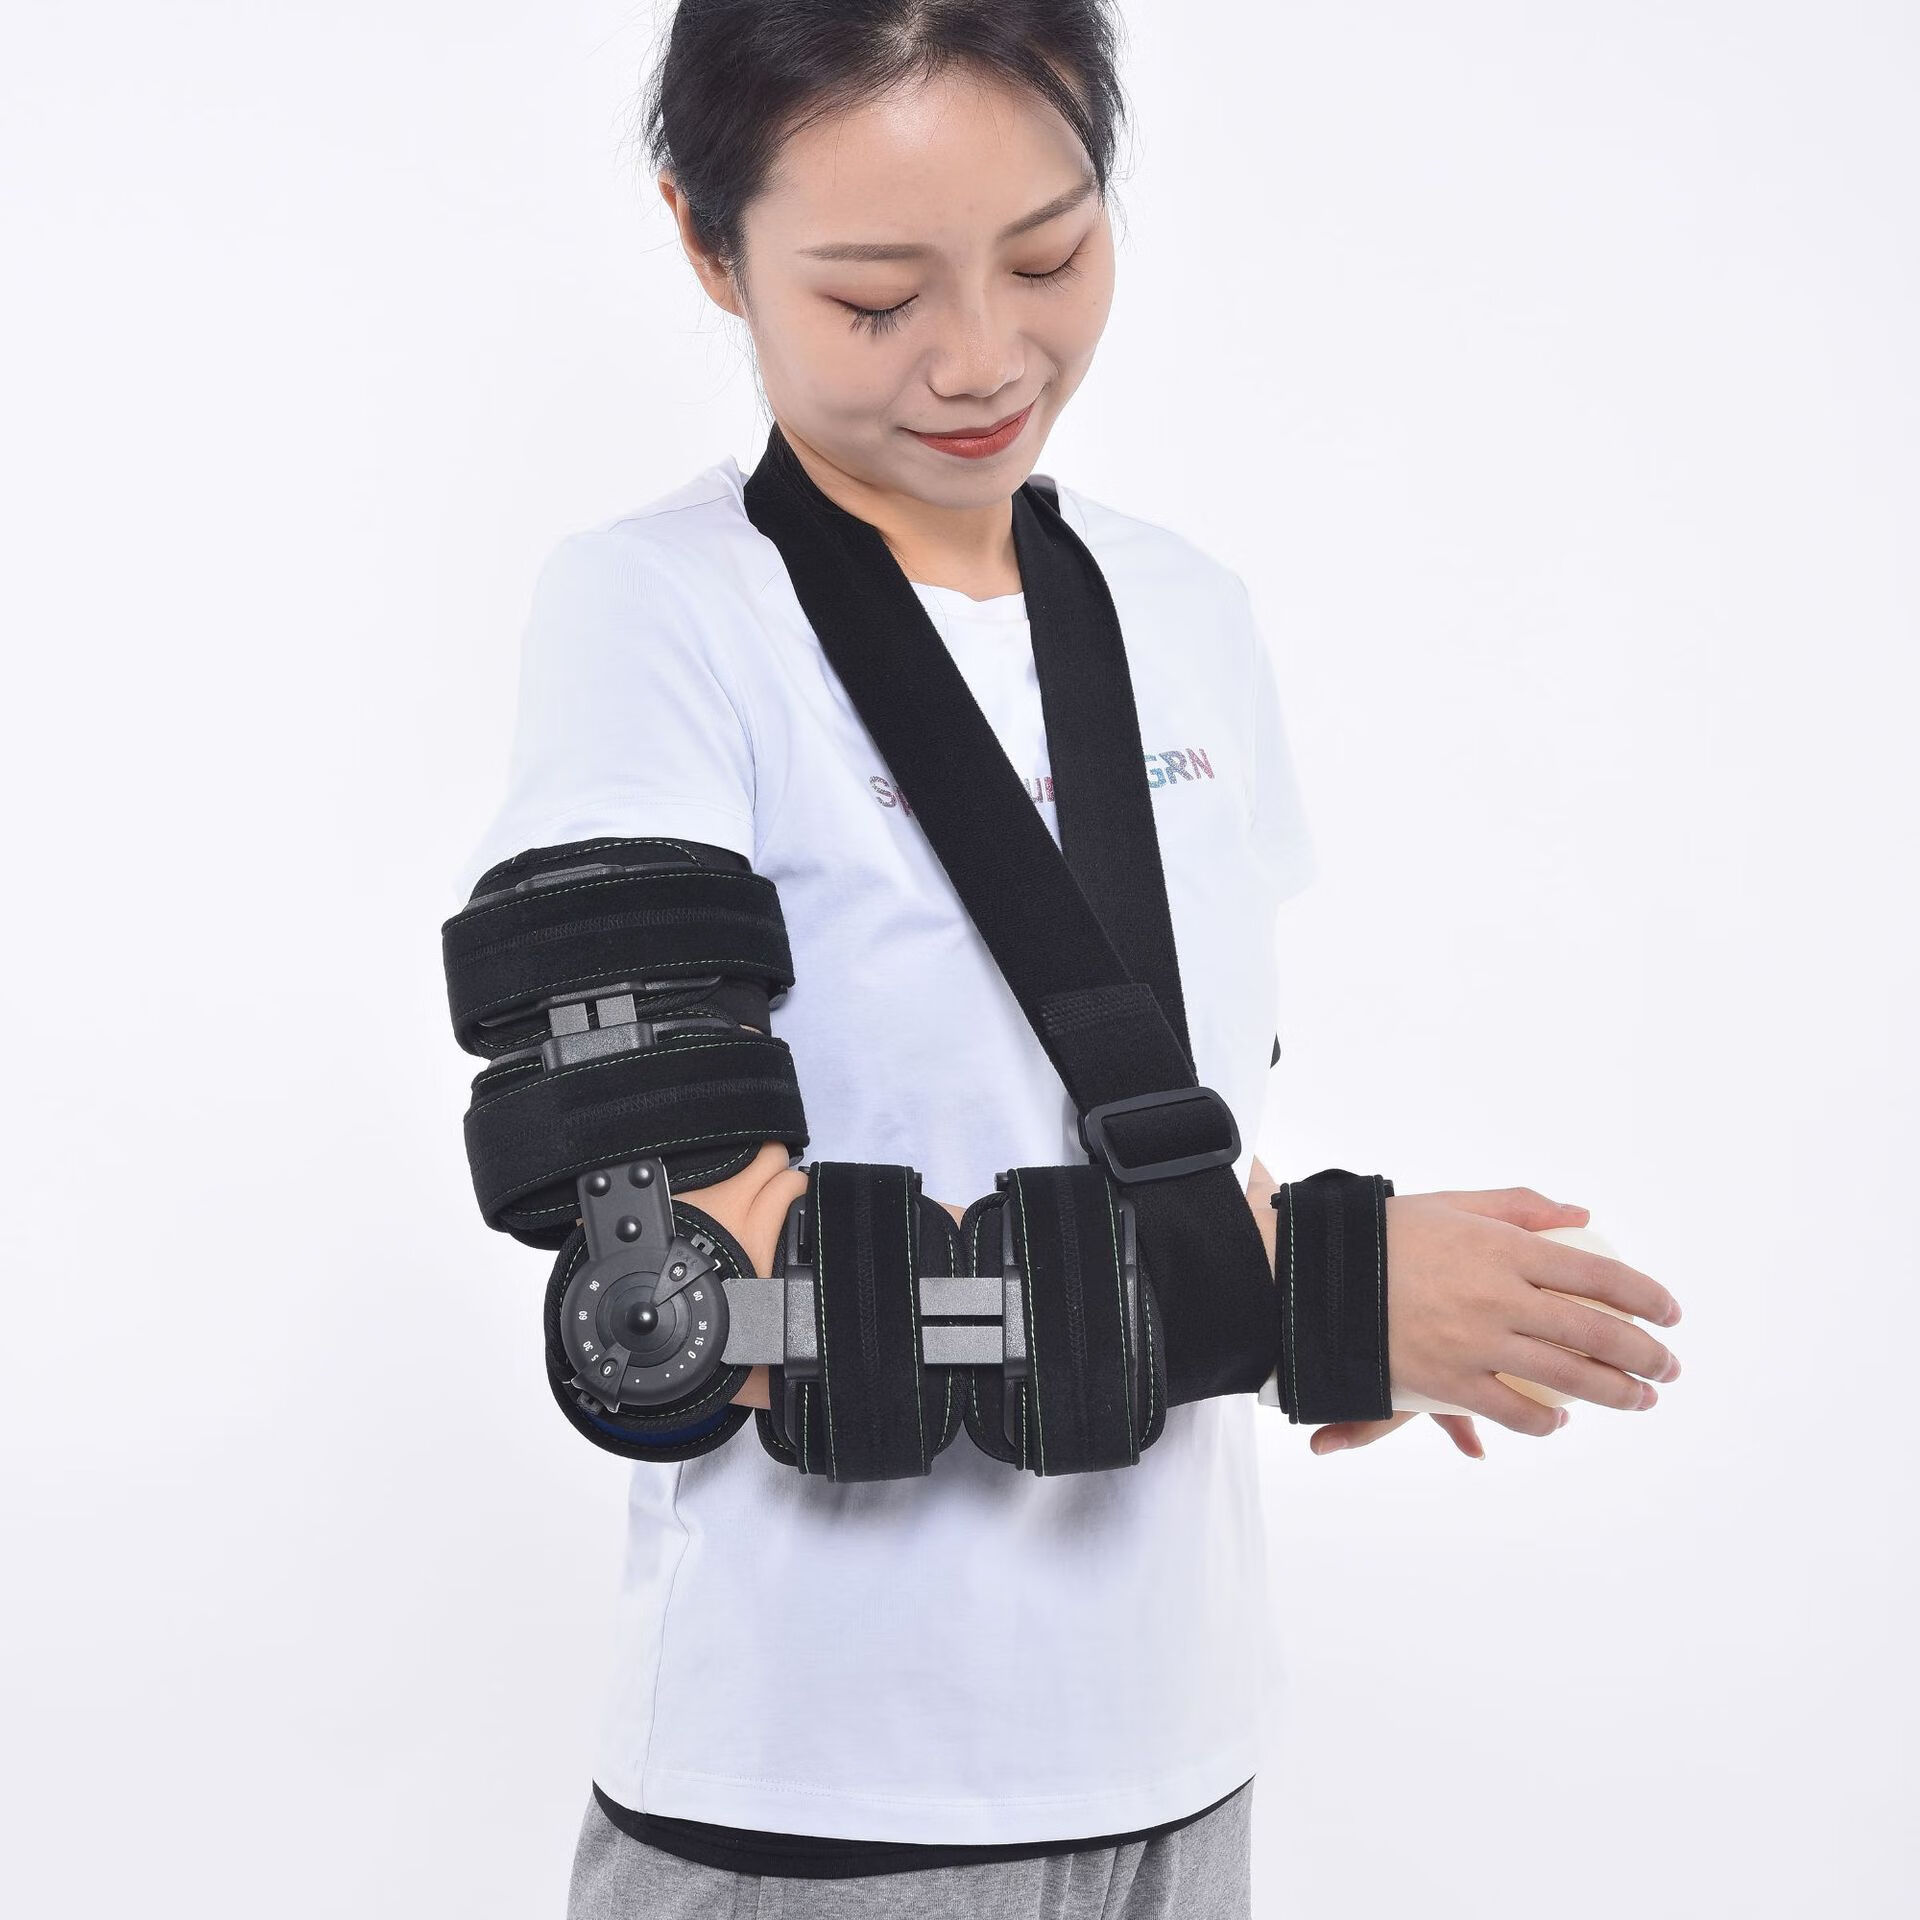 Orthopedic Medical Elbow Brace Support